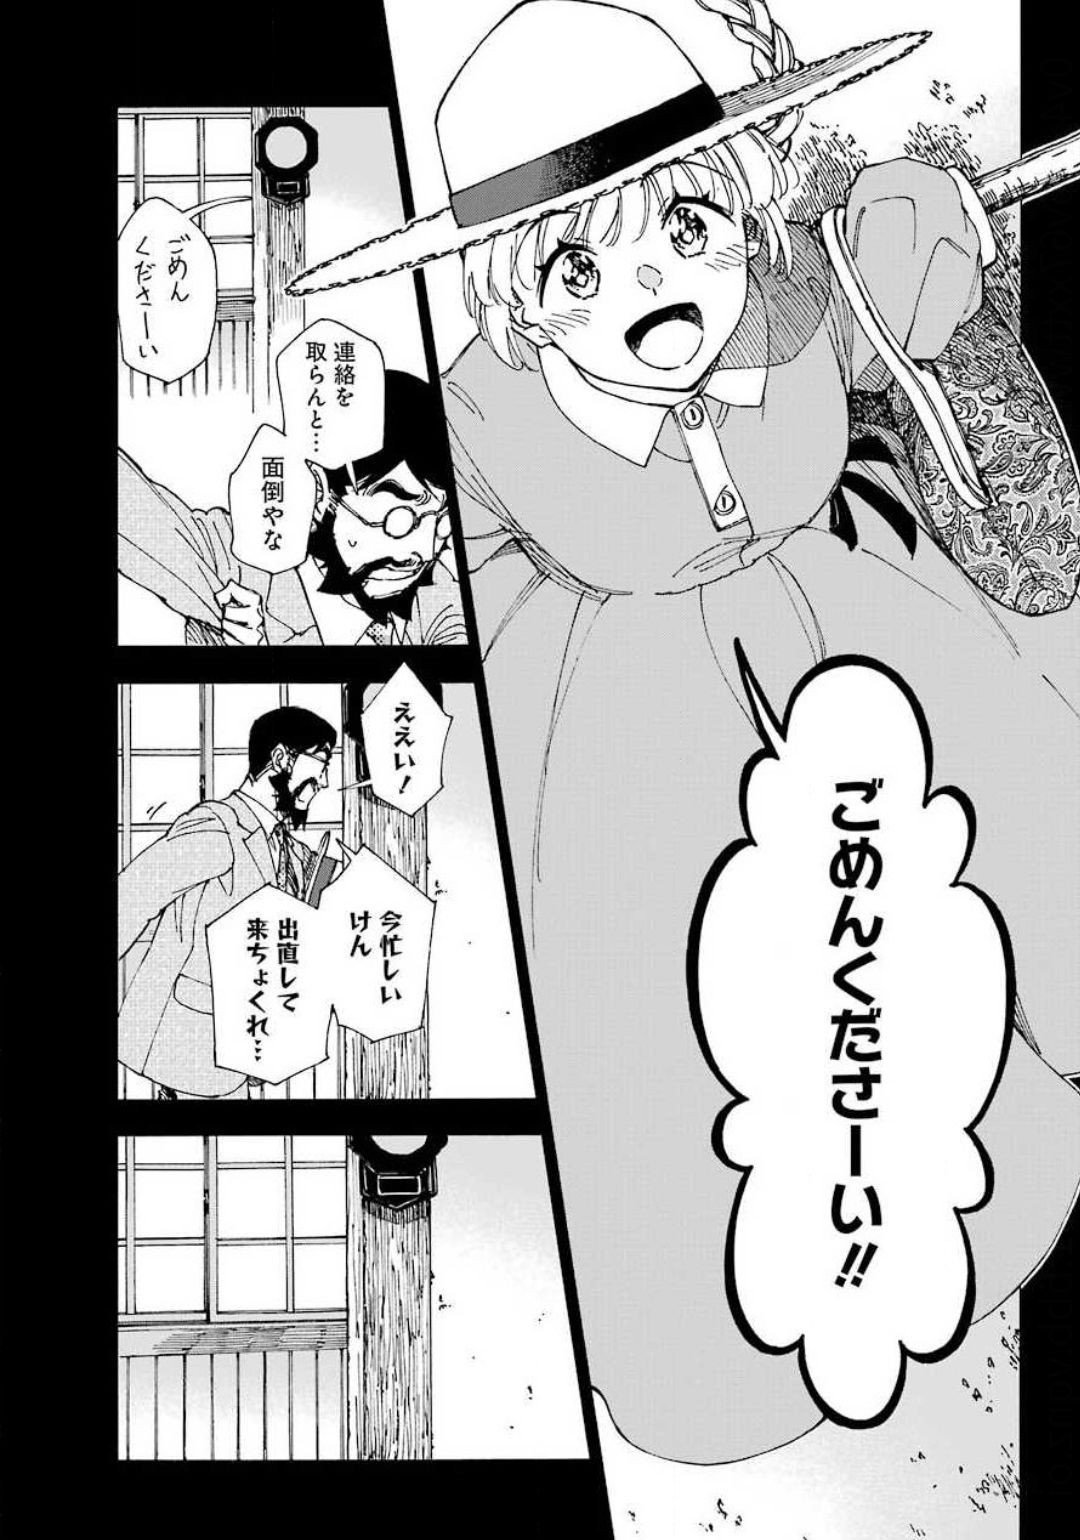 Hotomeku-kakashi - Chapter 07-1 - Page 7